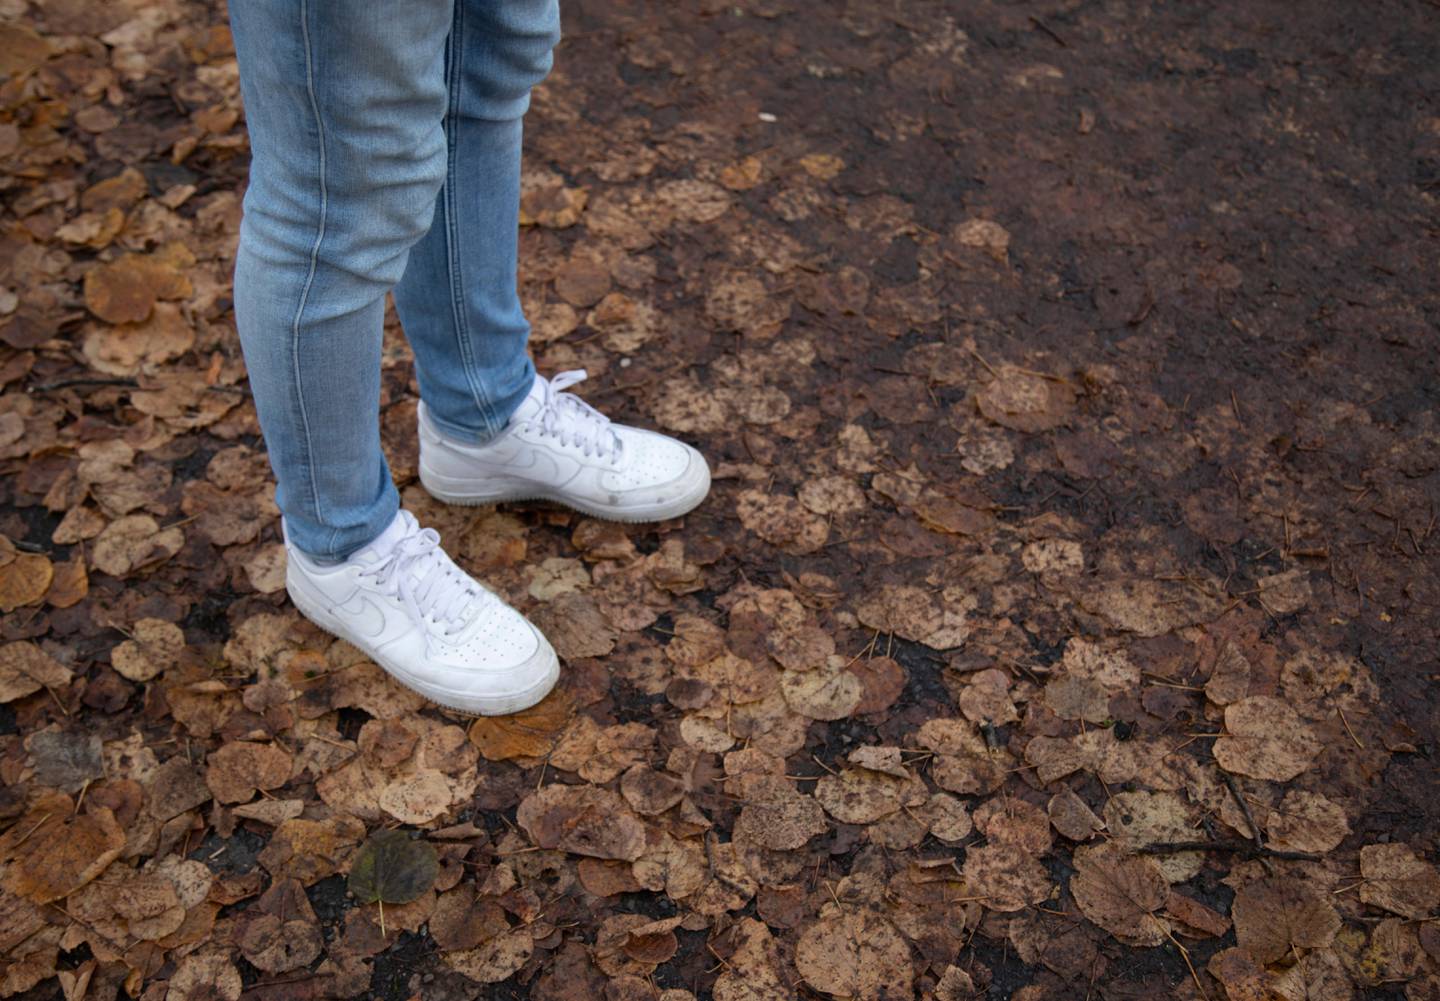 Oslo 20191031. 
En ung mann med hvite sko og olabukse står på høstløv.
Foto: Ulf Nygaard / NTB scanpix